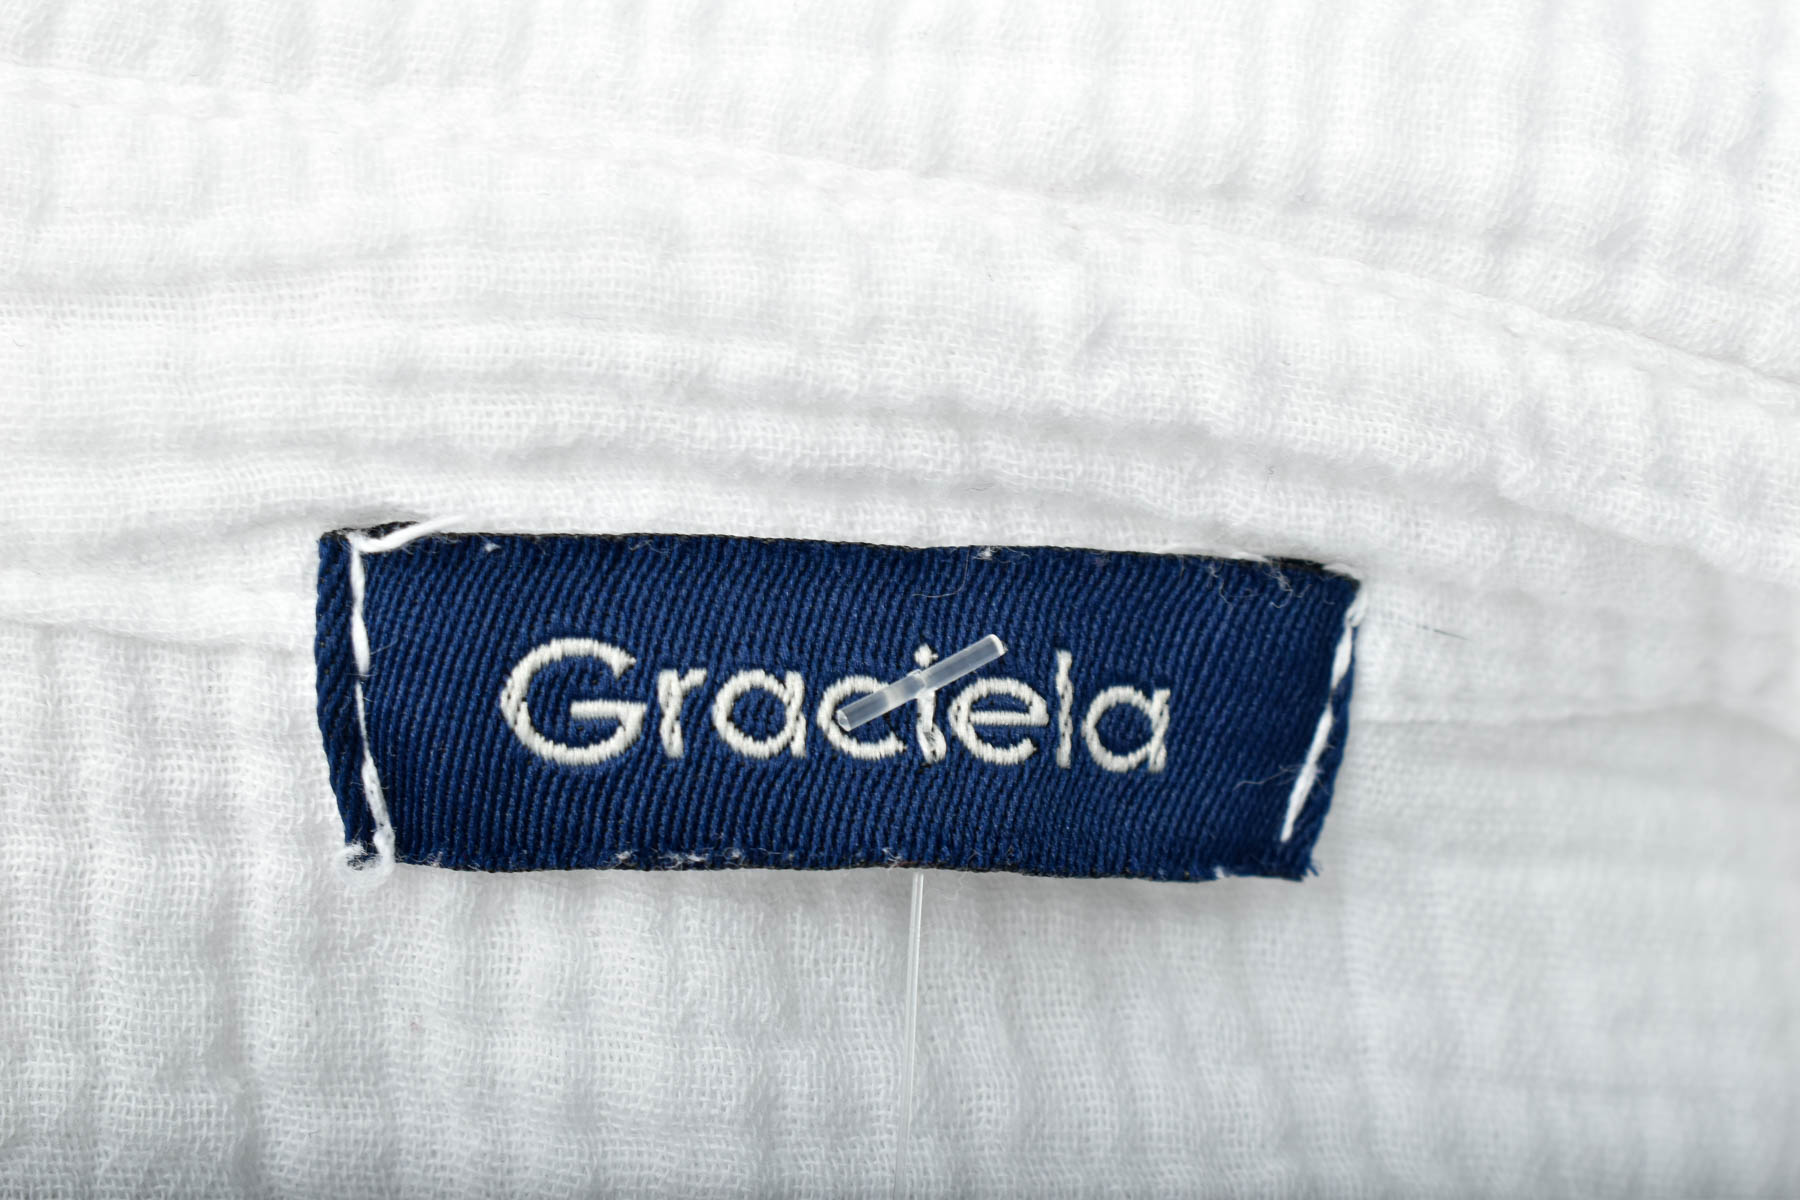 Women's shirt - Graciela - 2